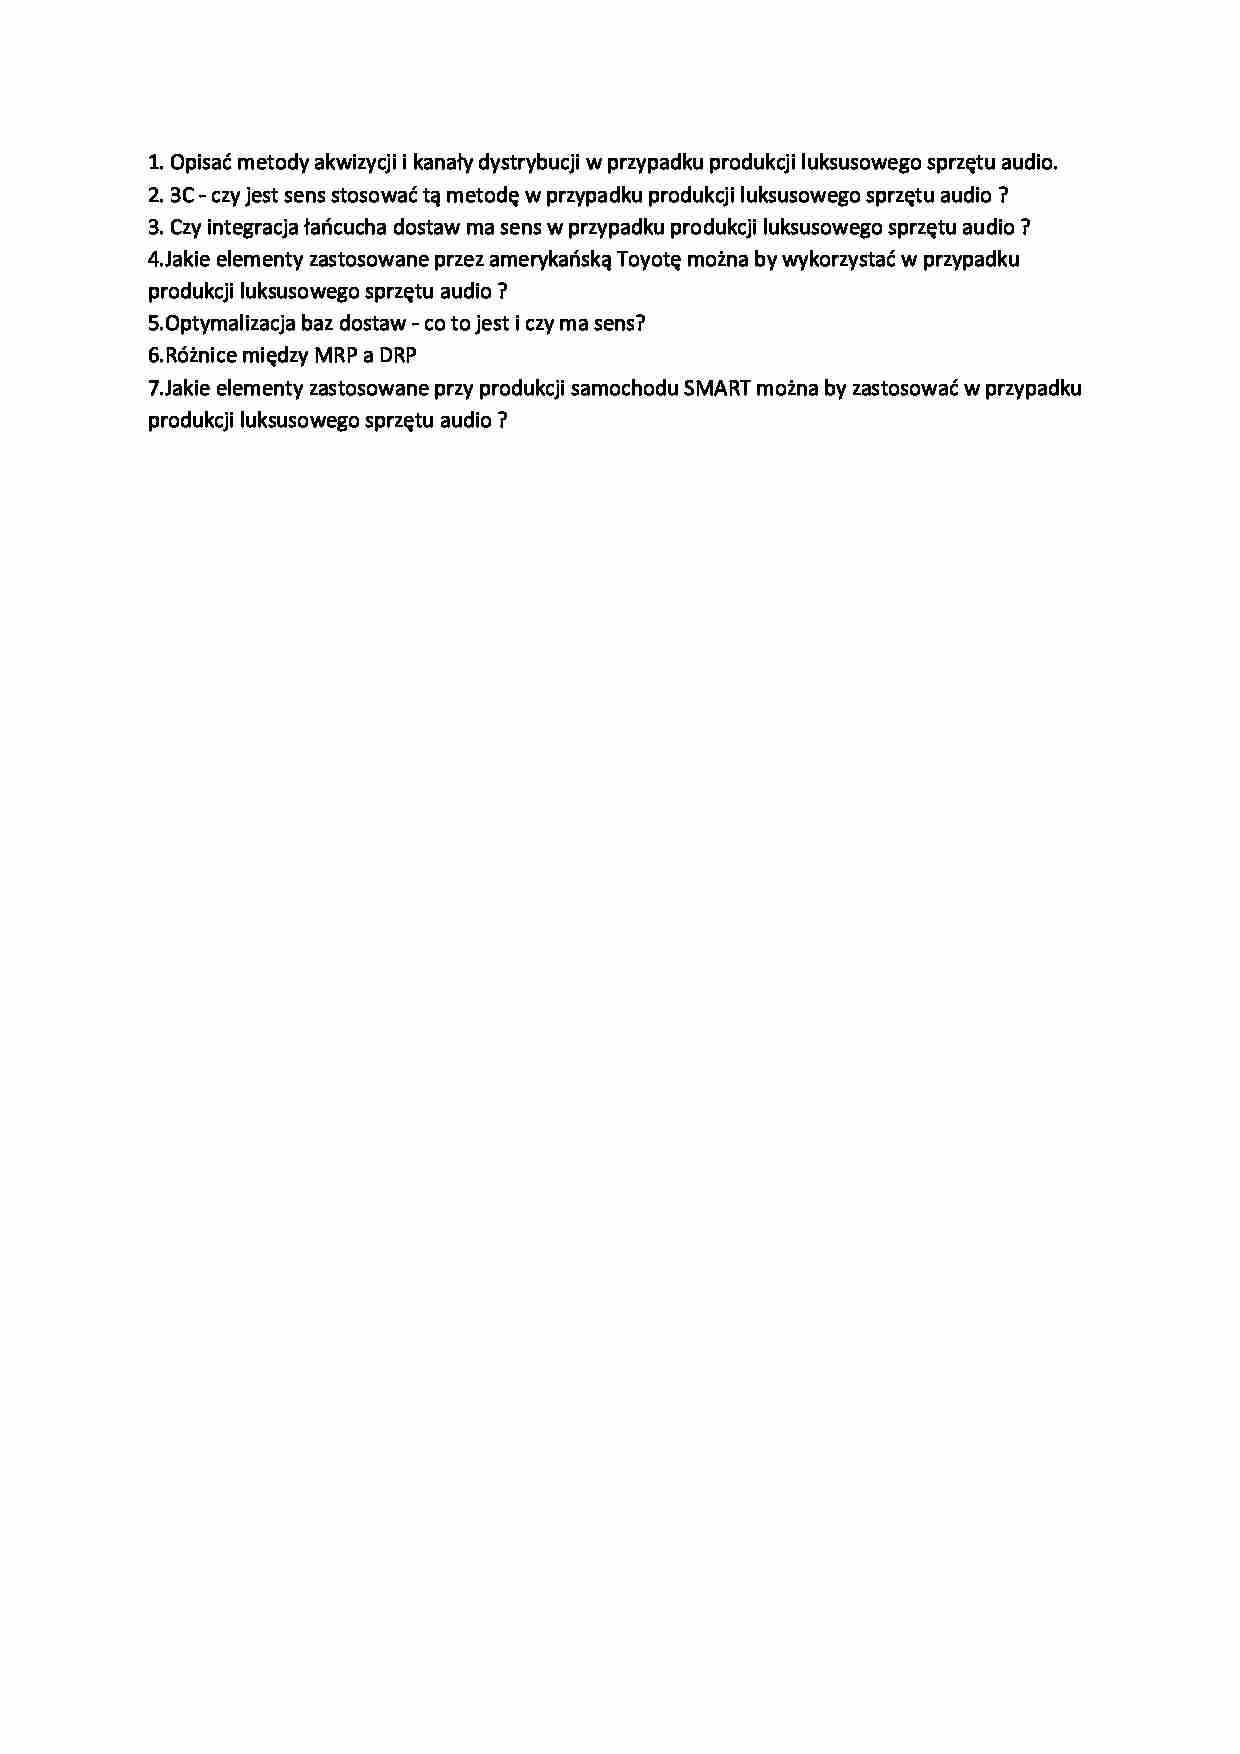 Pytania 5 - strona 1